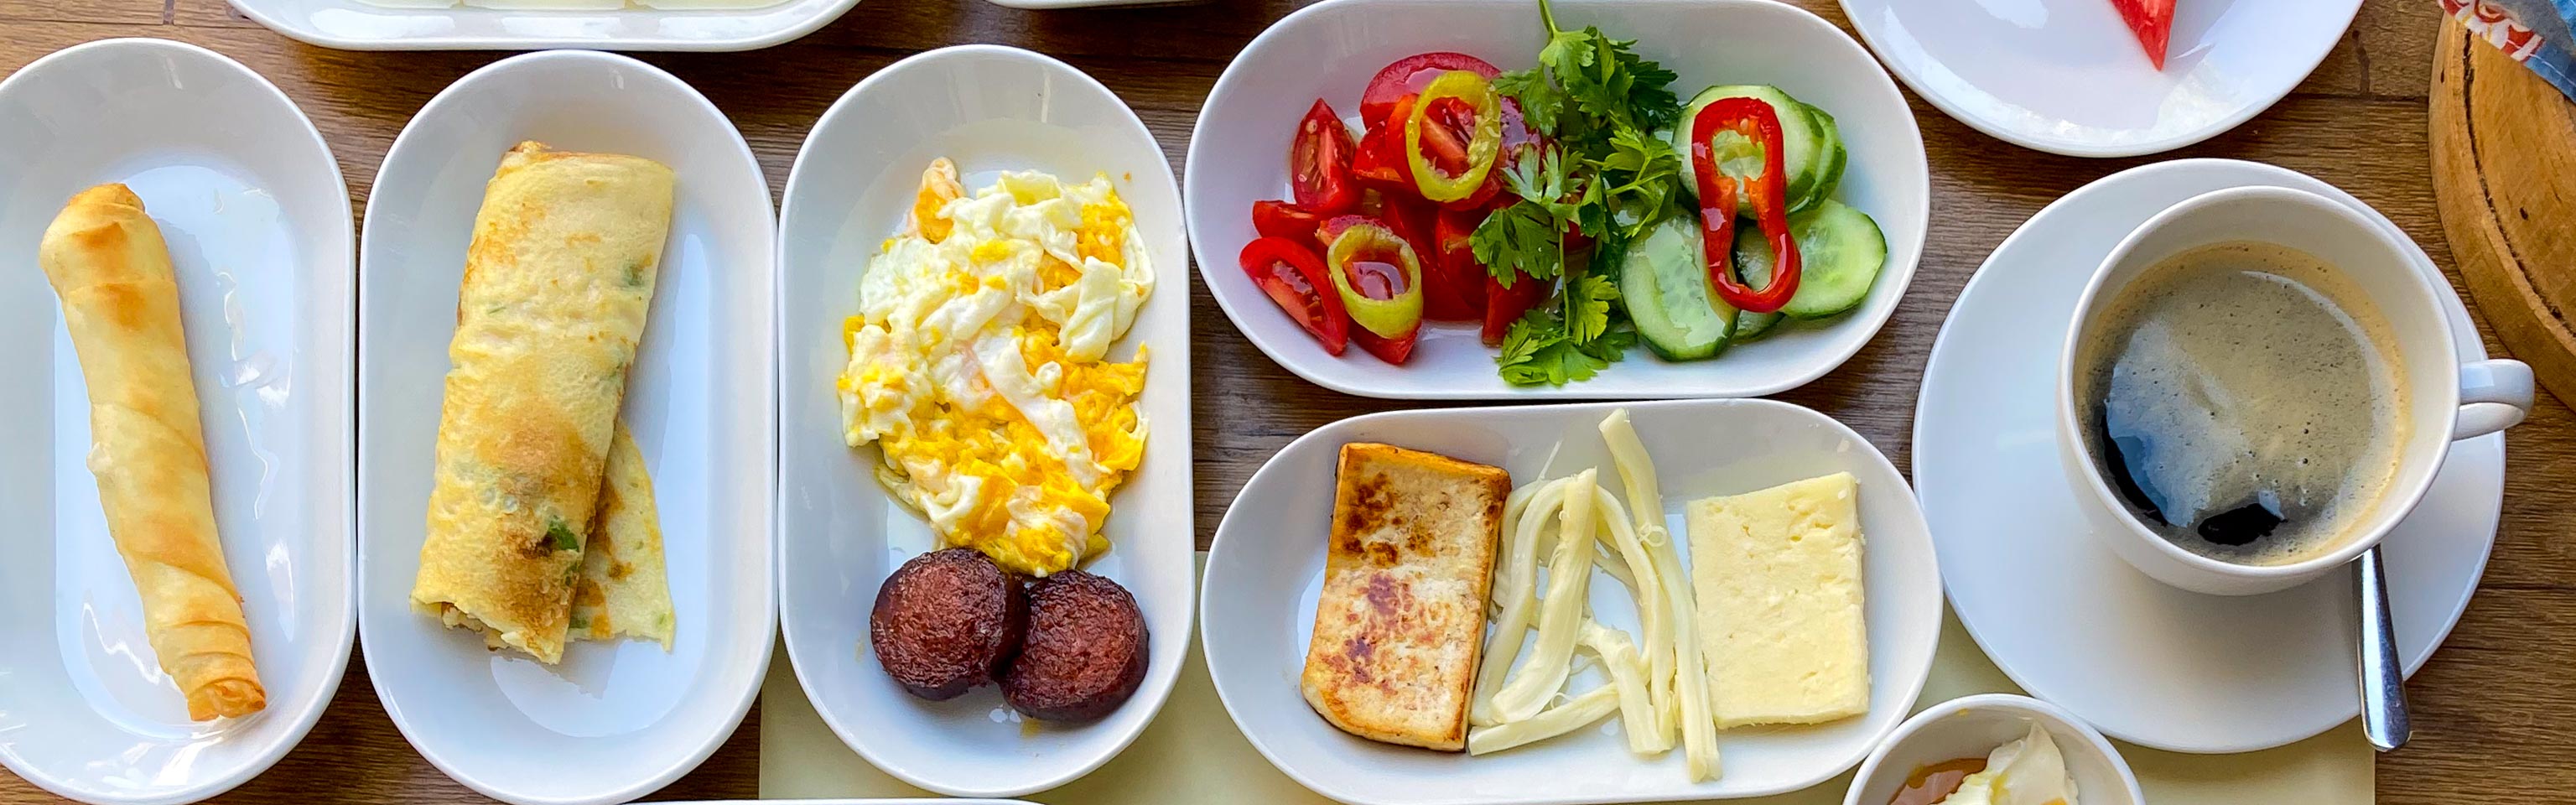 Frühstück im Hotel Attalos, Pergamon, Türkei